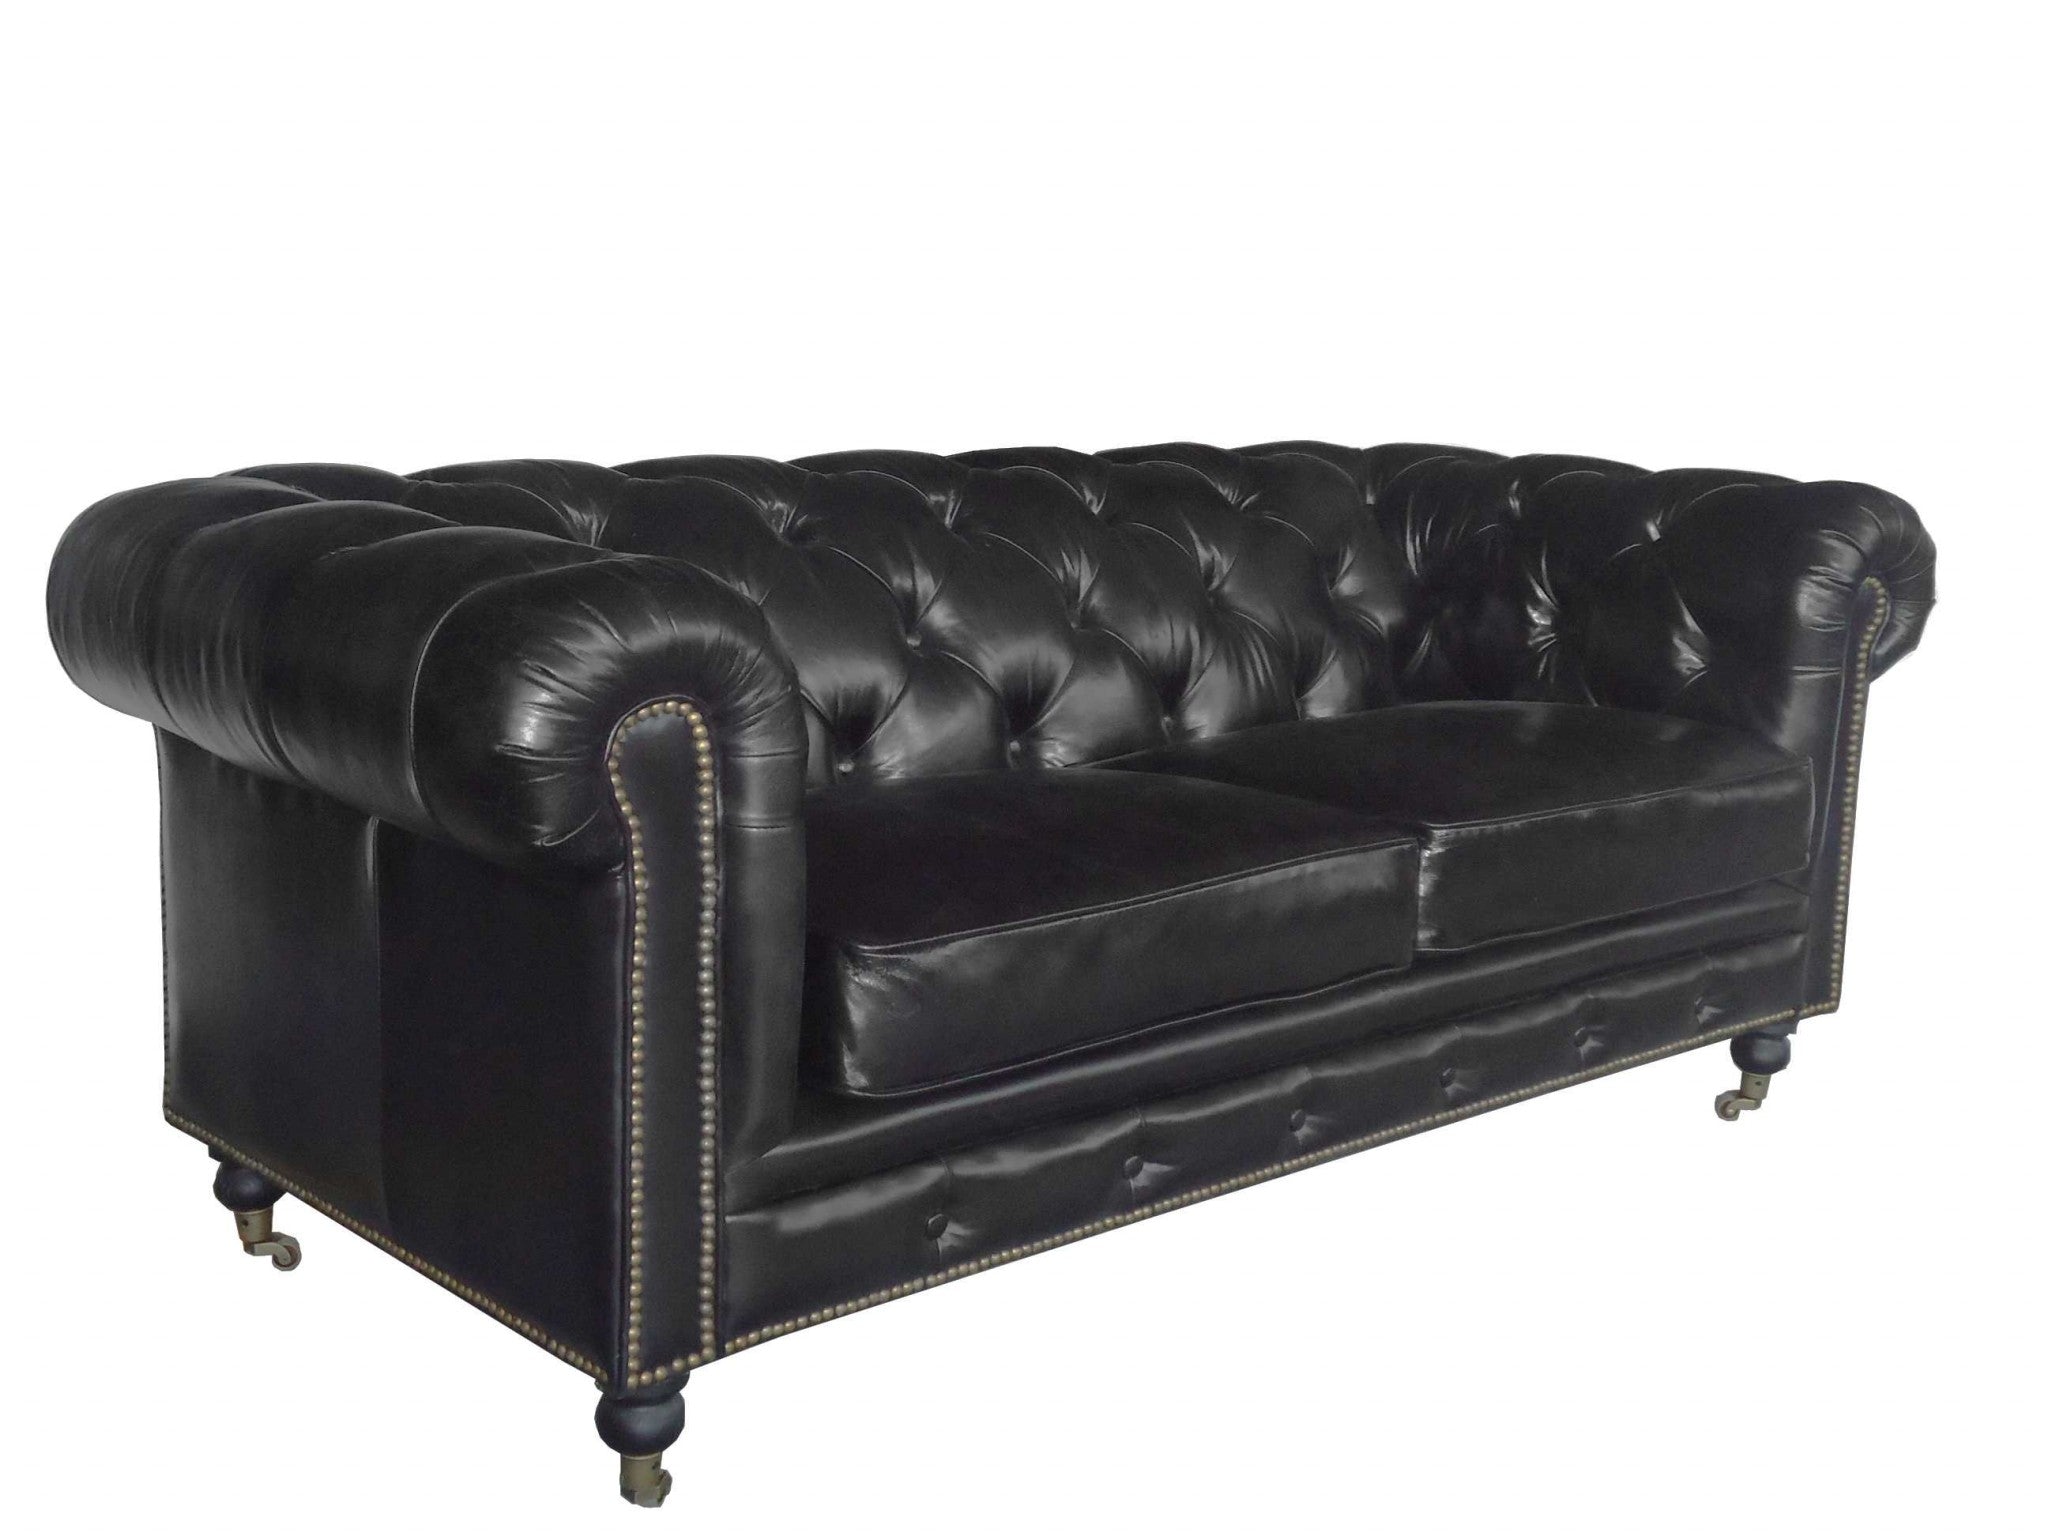 36" Black Leather Sofa